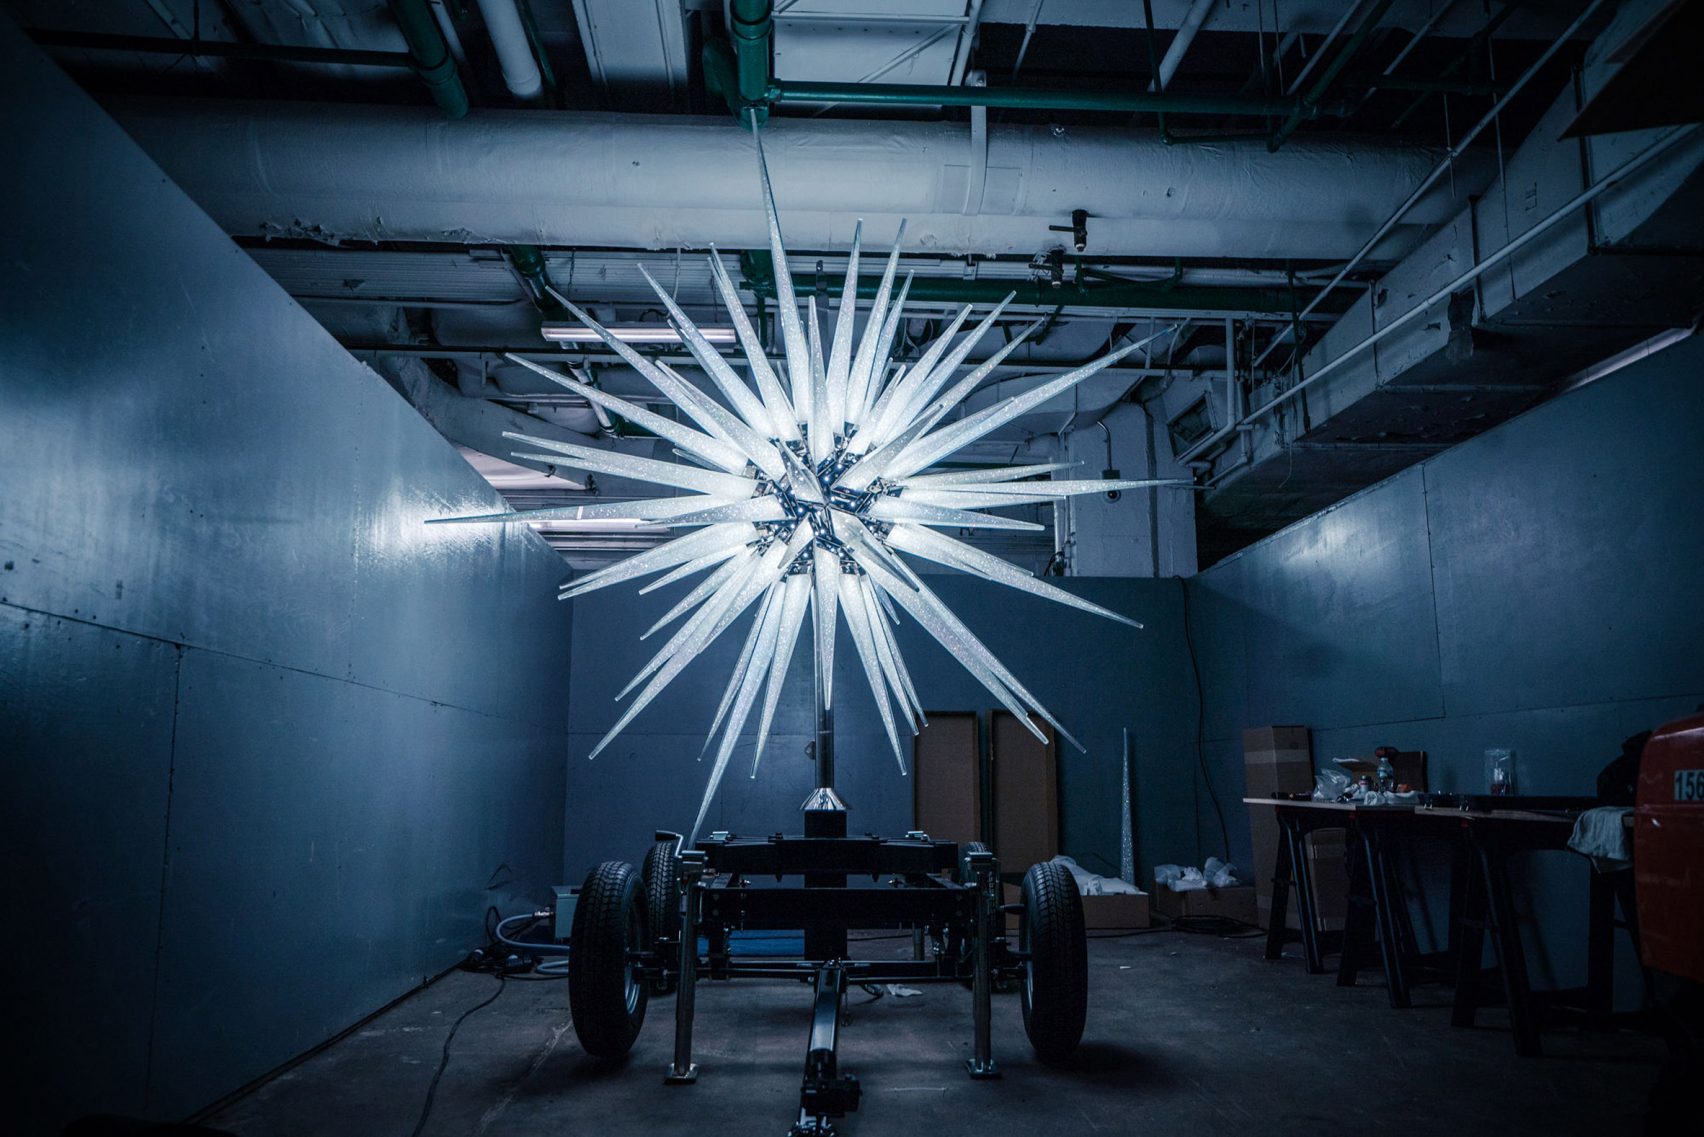 Daniel Libeskind's Rockefeller Christmas Tree Star Sparkles with Swarovski Crystal Spikes